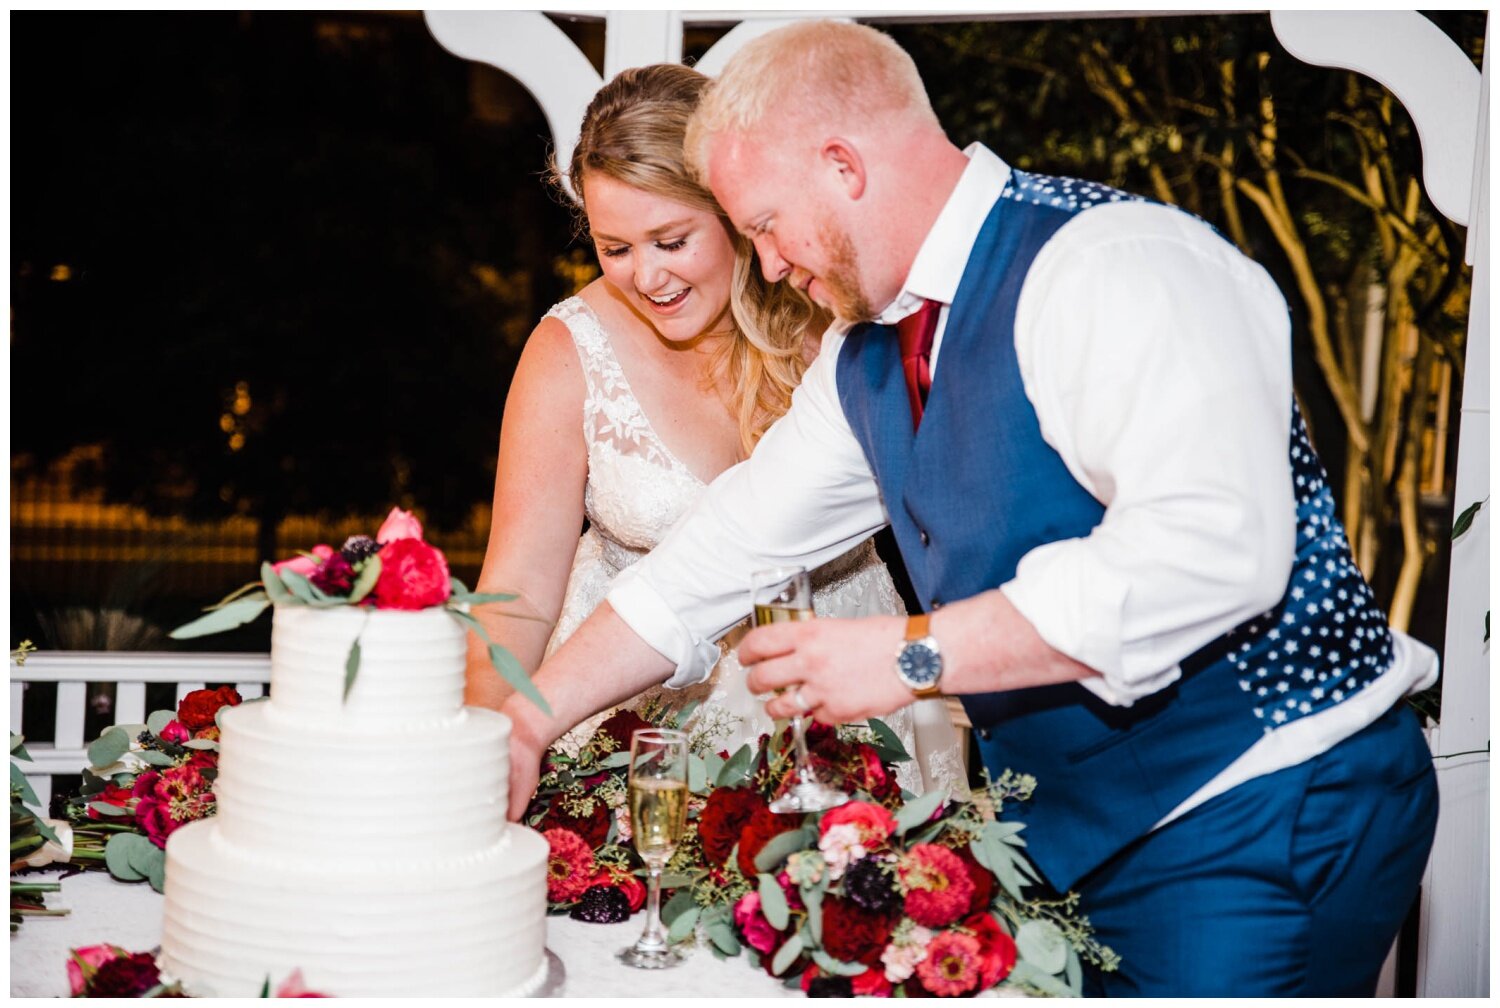 Birkby House Wedding bride and groom cut cake